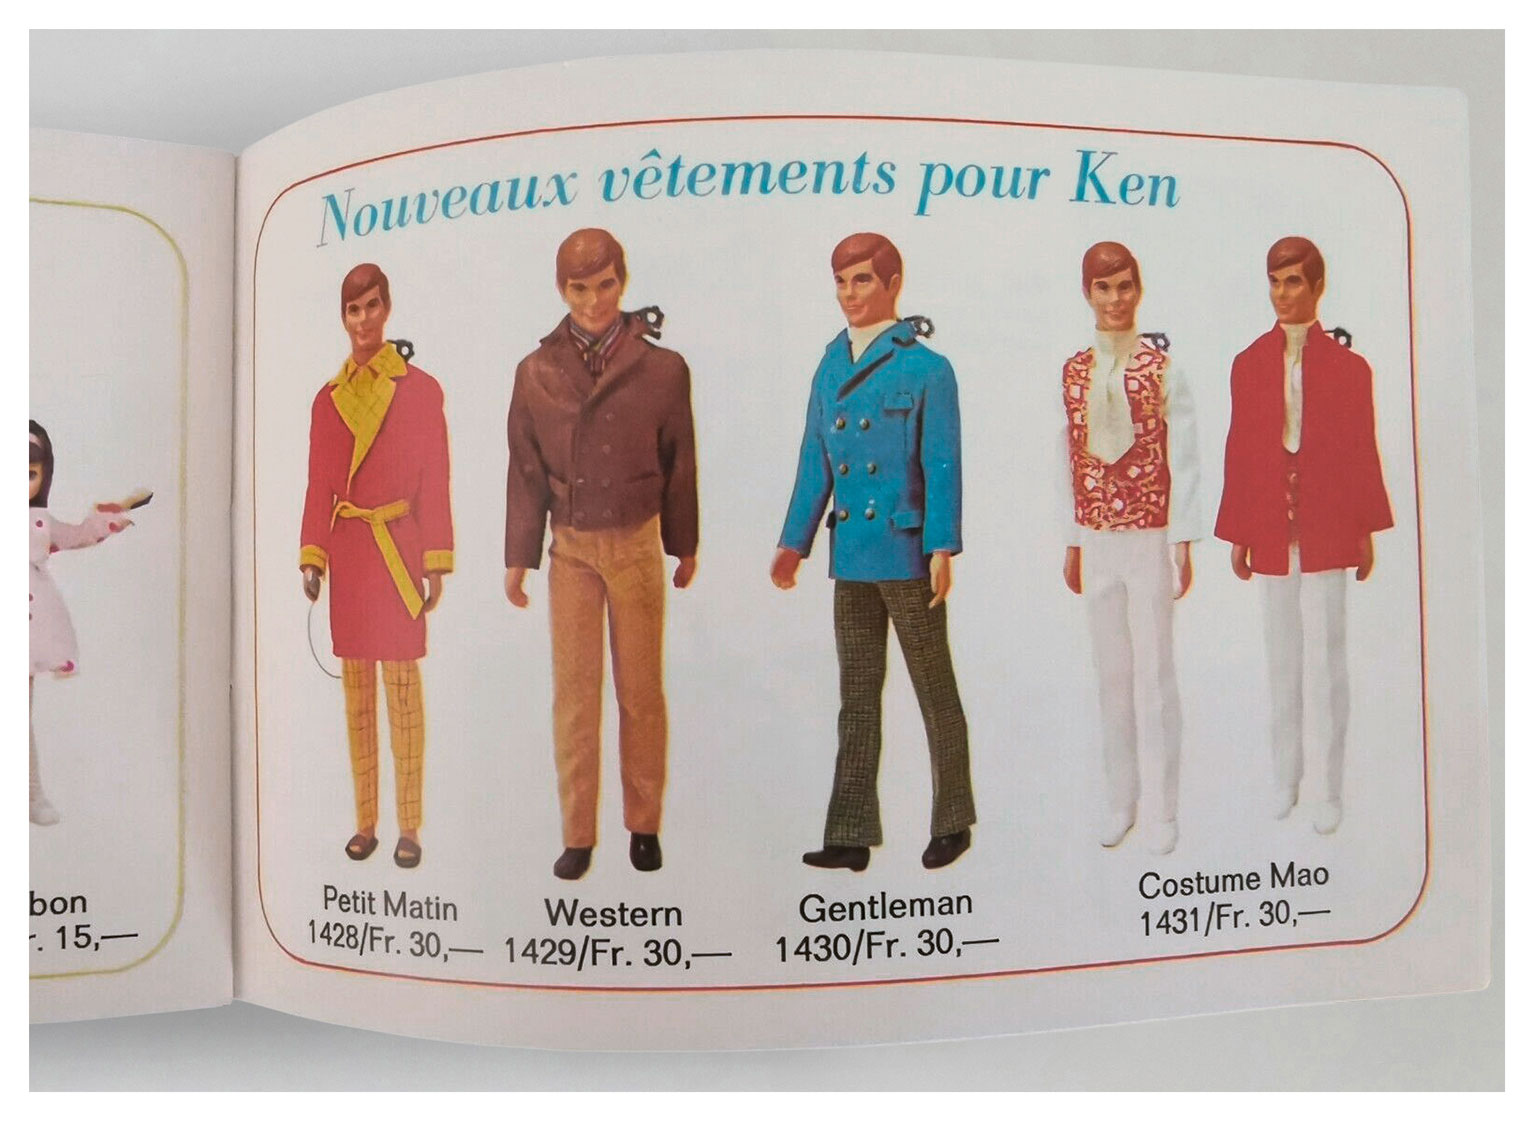 From 1969 French Journal de Mode de Barbie